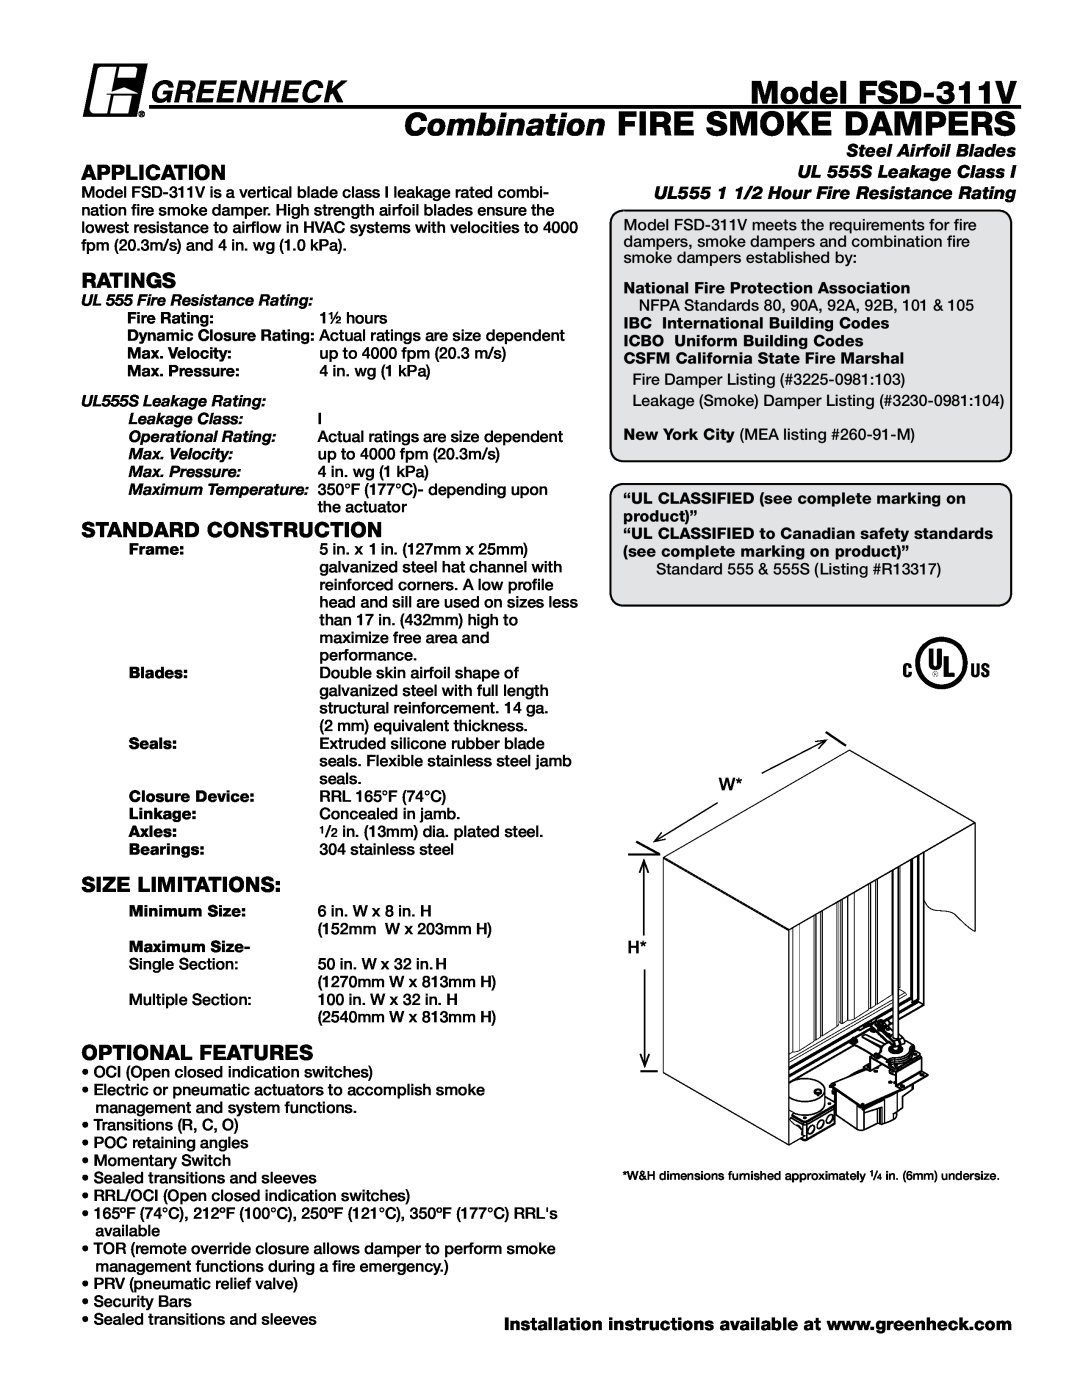 Greenheck Fan installation instructions Model FSD-311V, Application, Ratings, Standard Construction, Size Limitations 